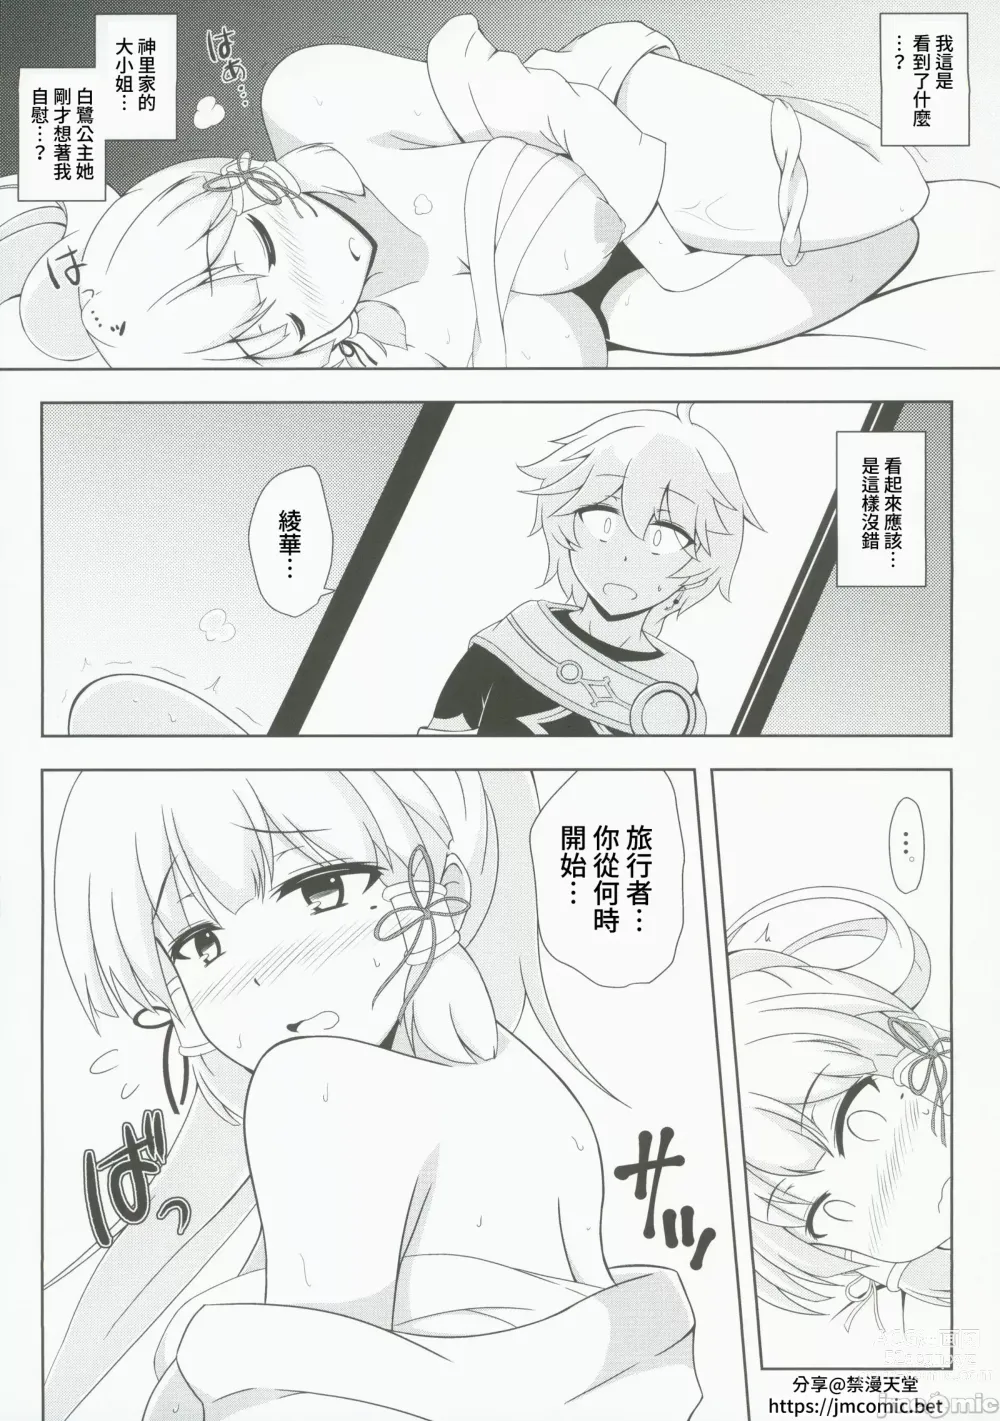 Page 7 of doujinshi 花白錦畫紙吹雪